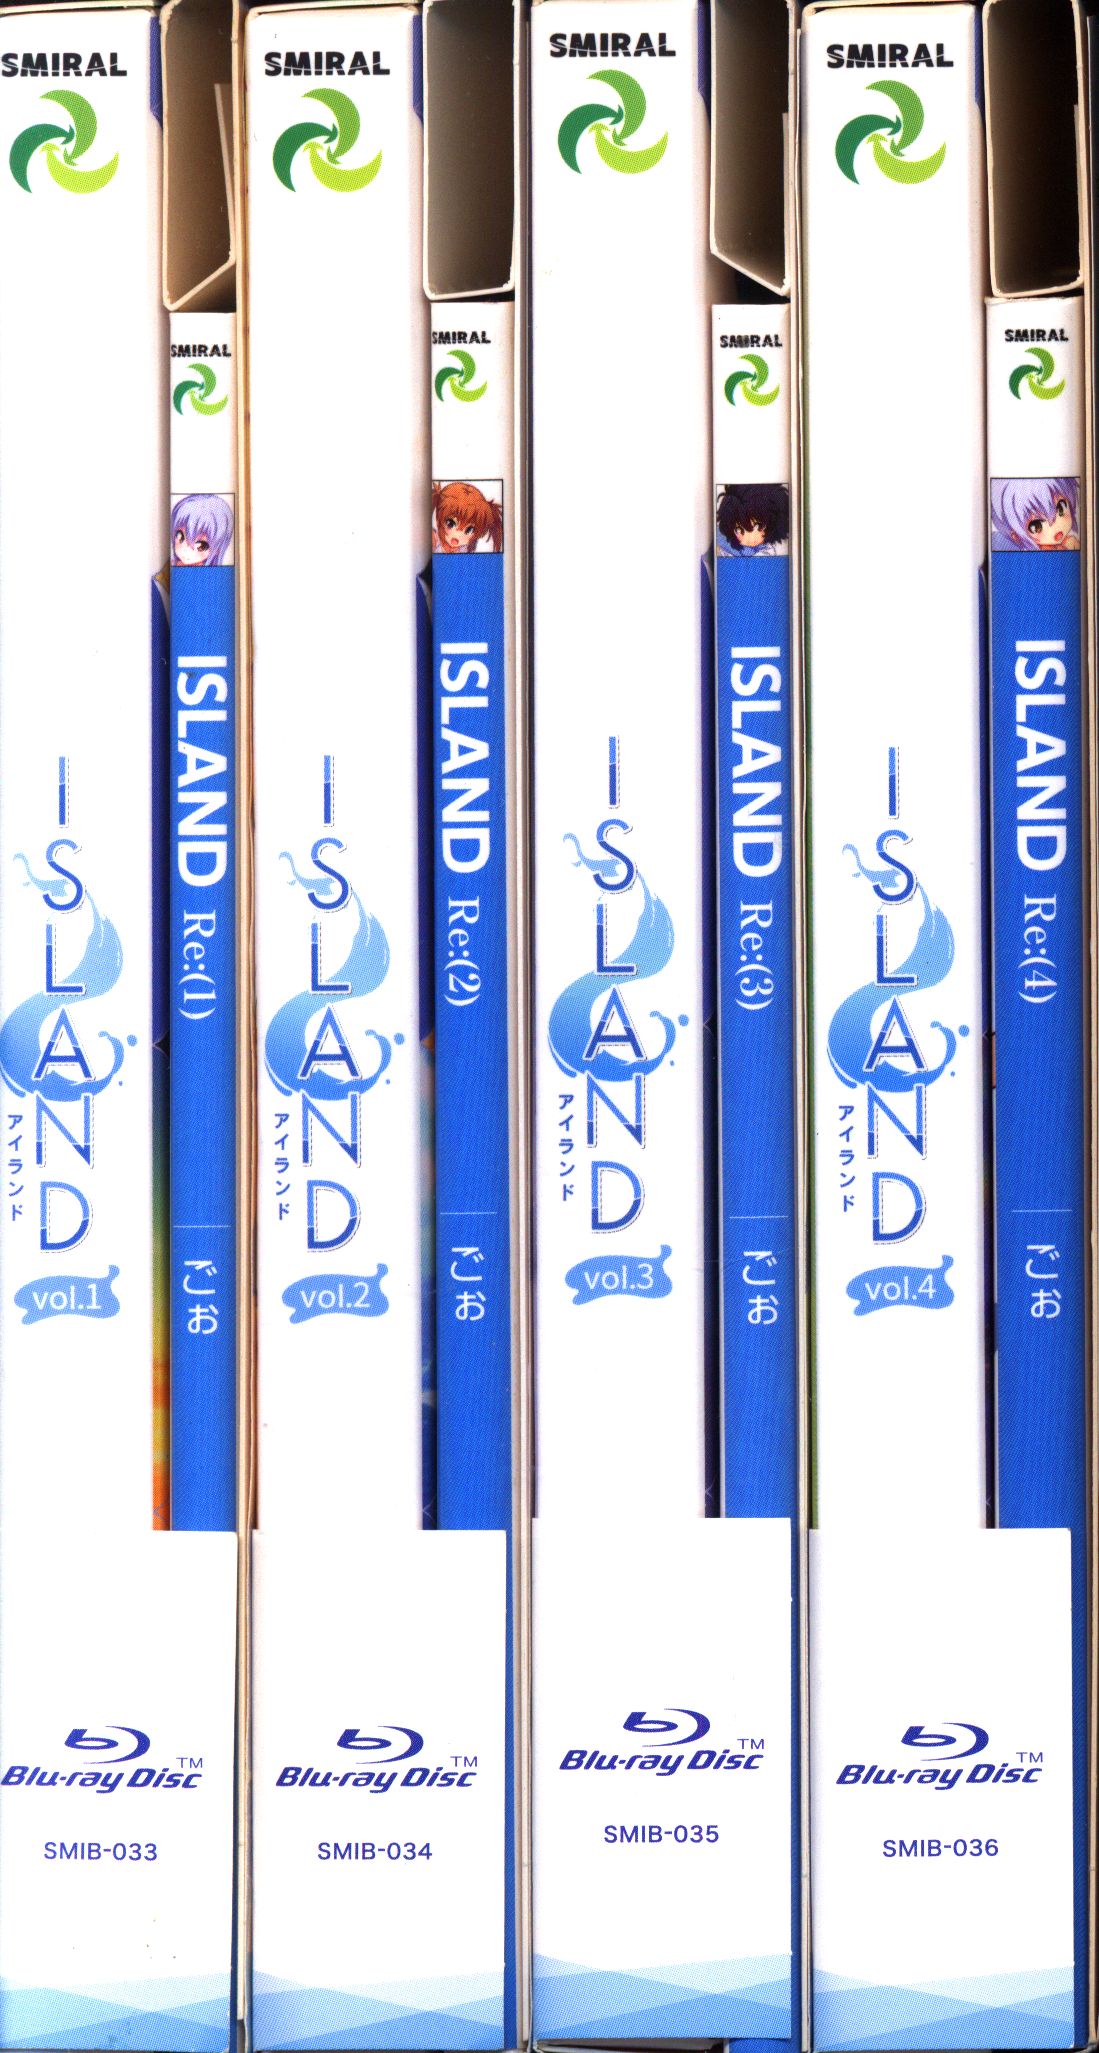 Blu-ray ISLAND(アイランド) 全4巻セット - ブルーレイ